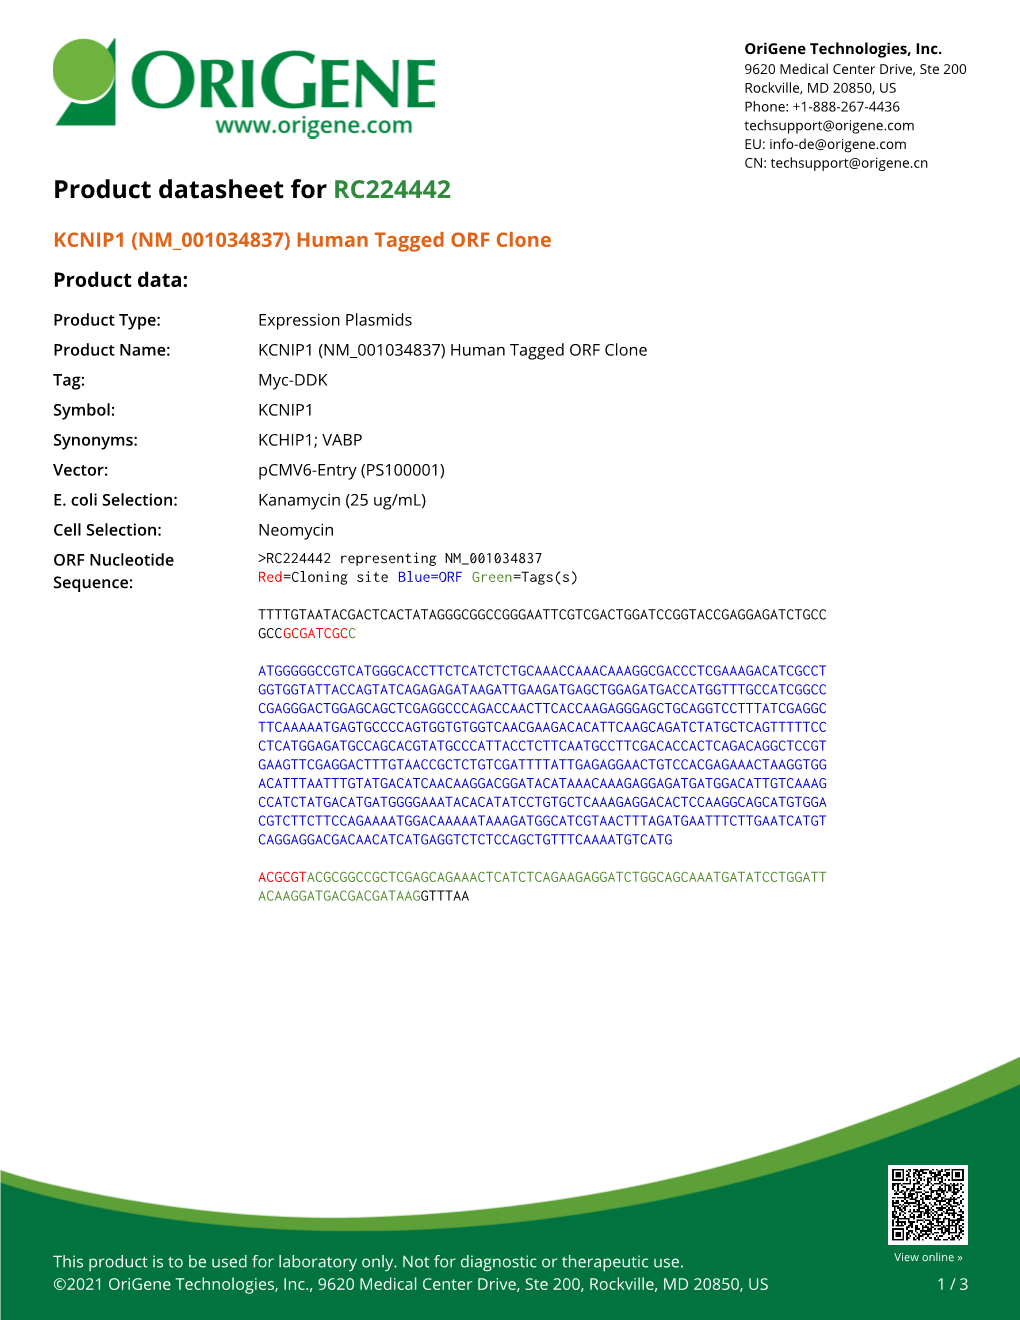 KCNIP1 (NM 001034837) Human Tagged ORF Clone Product Data